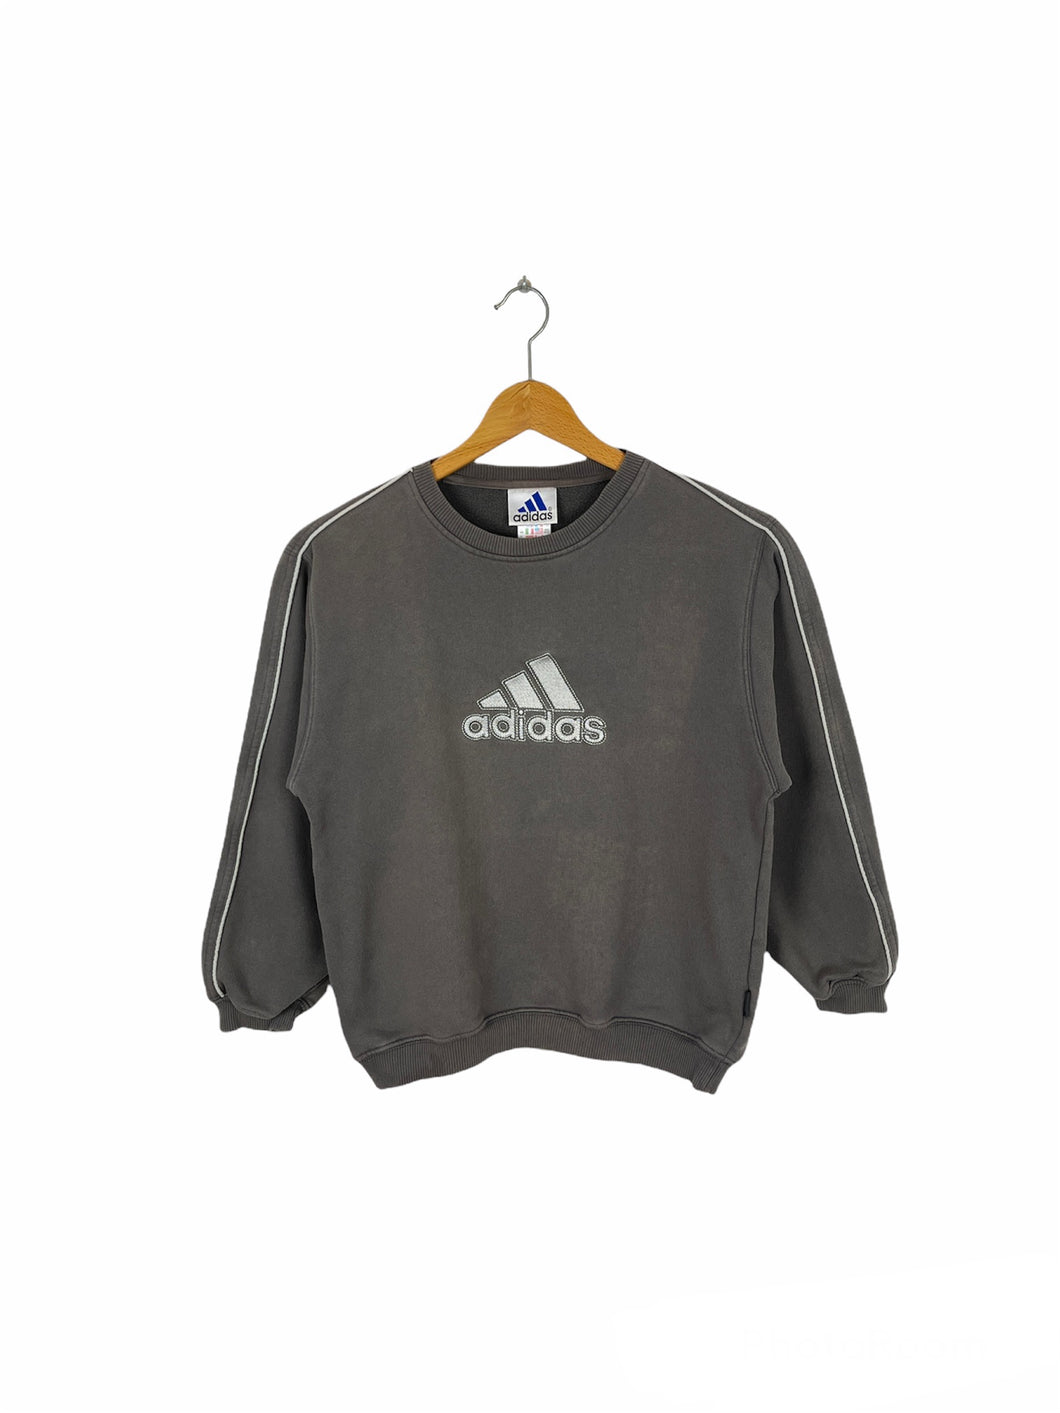 Adidas Sweatshirt - XXSmall